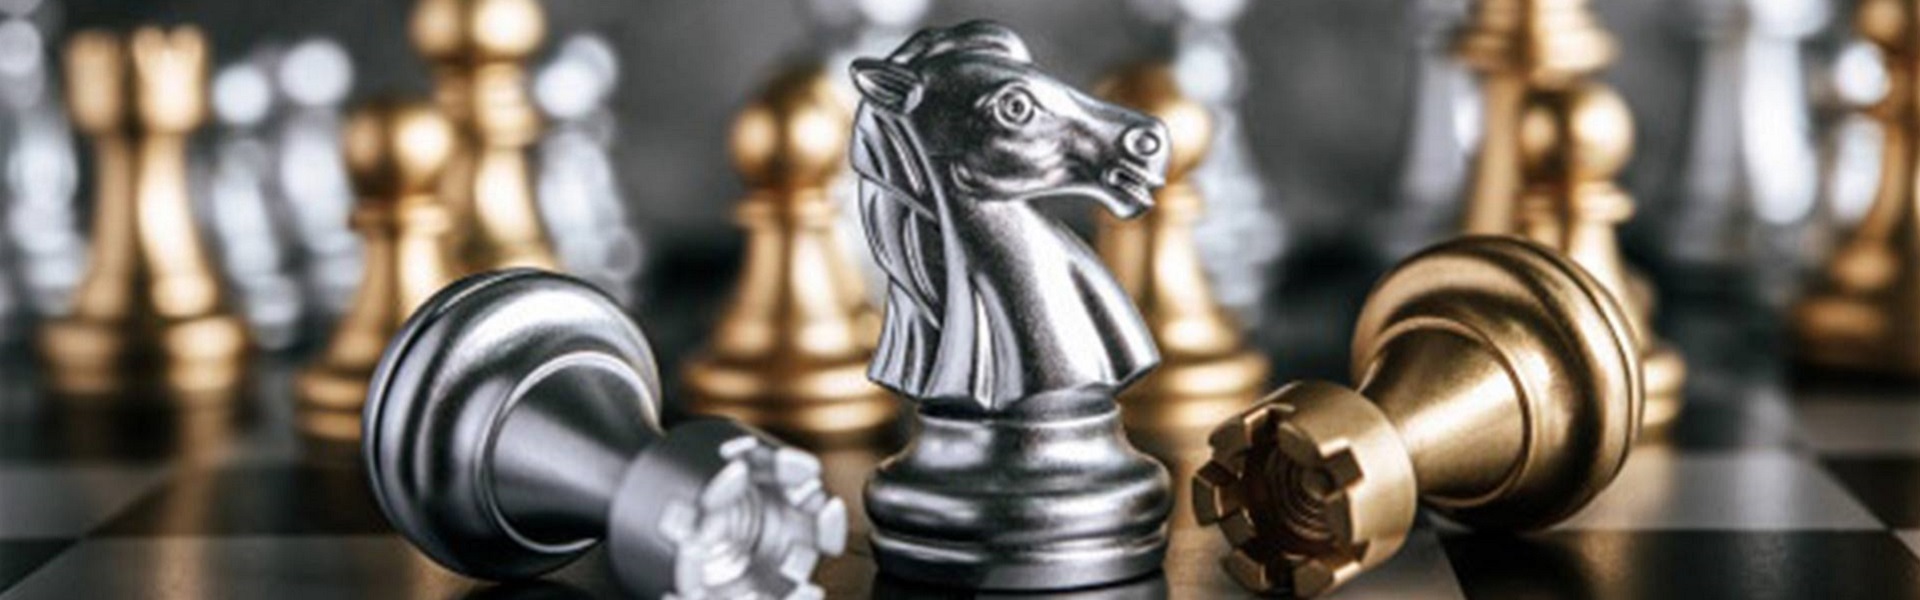 Zubna tehnika | Chess lessons Dubai & New York